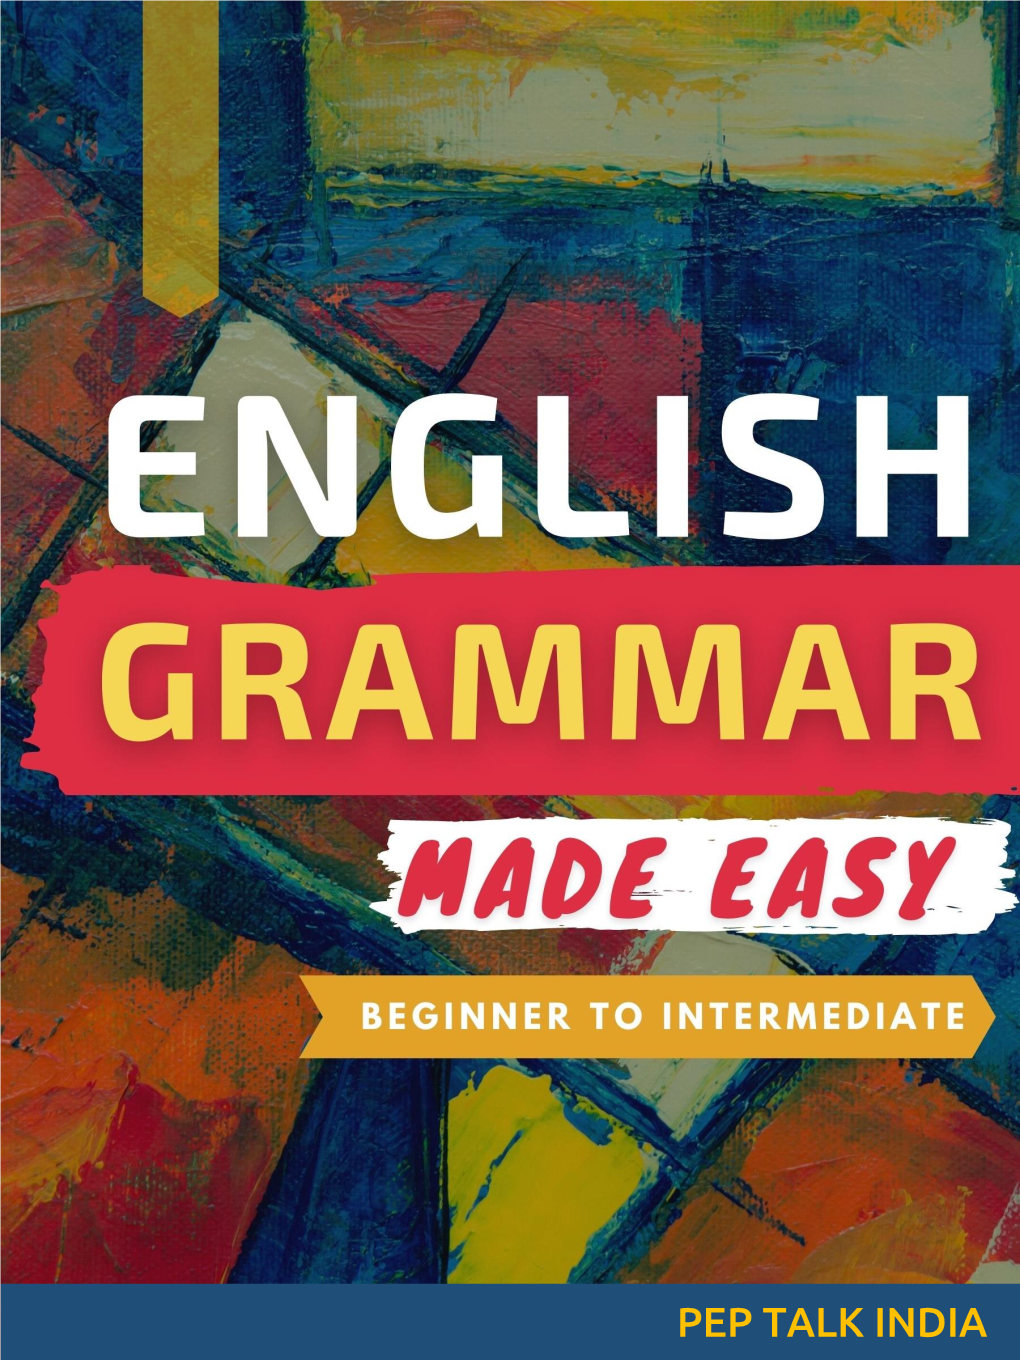 English-Grammar-Made-Easy.Pdf